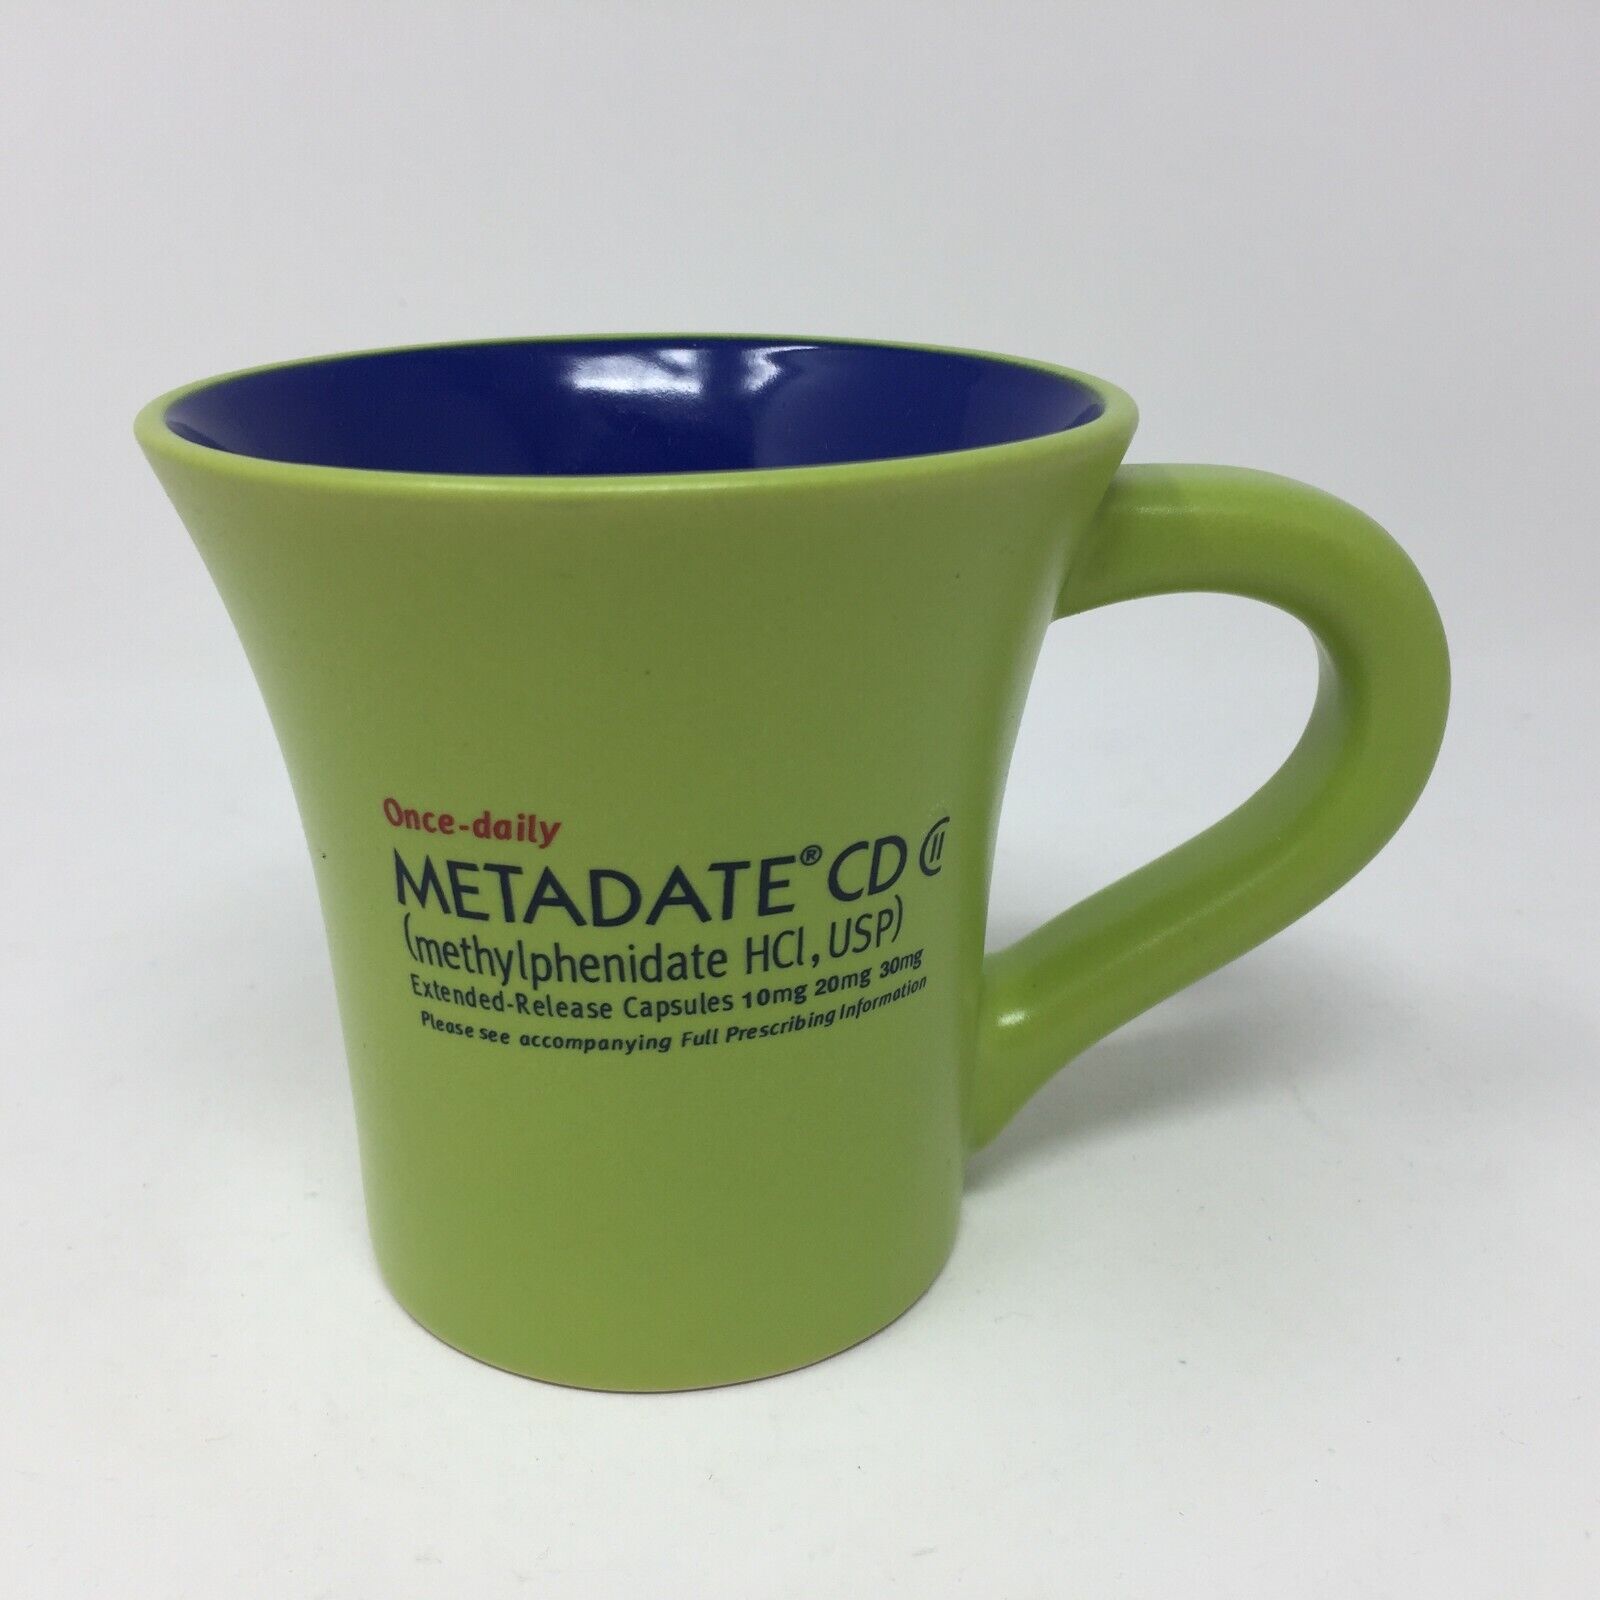 Lannett Co Metadate CD Ritalin Drug Representative Promo Green & Blue Coffee Mug